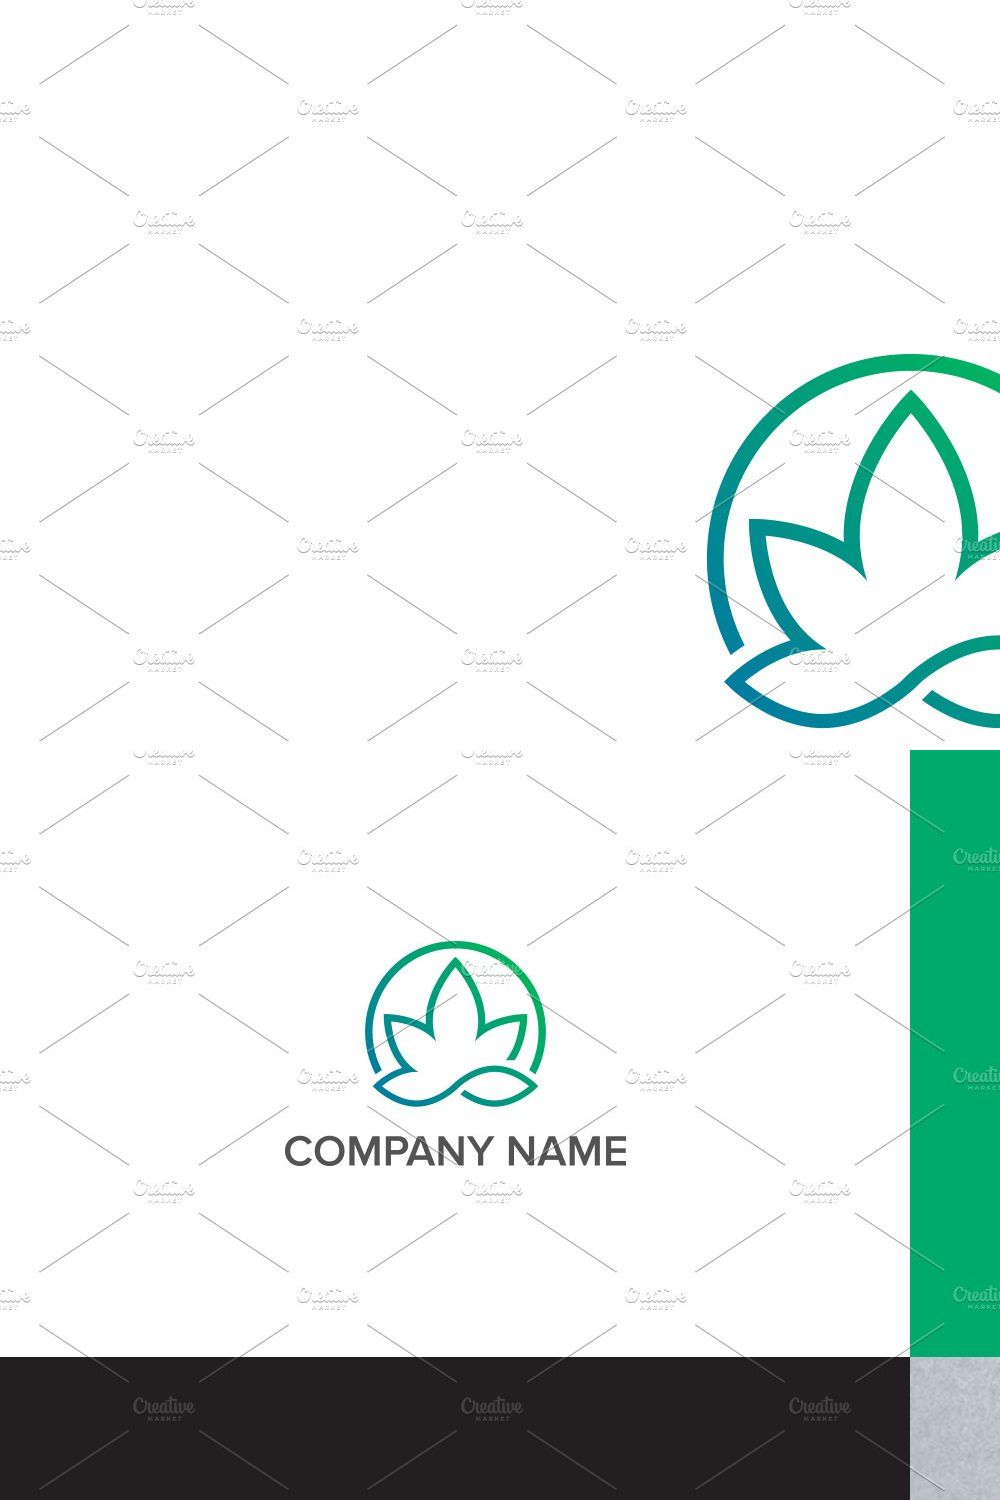 Cannabis logo design pinterest preview image.